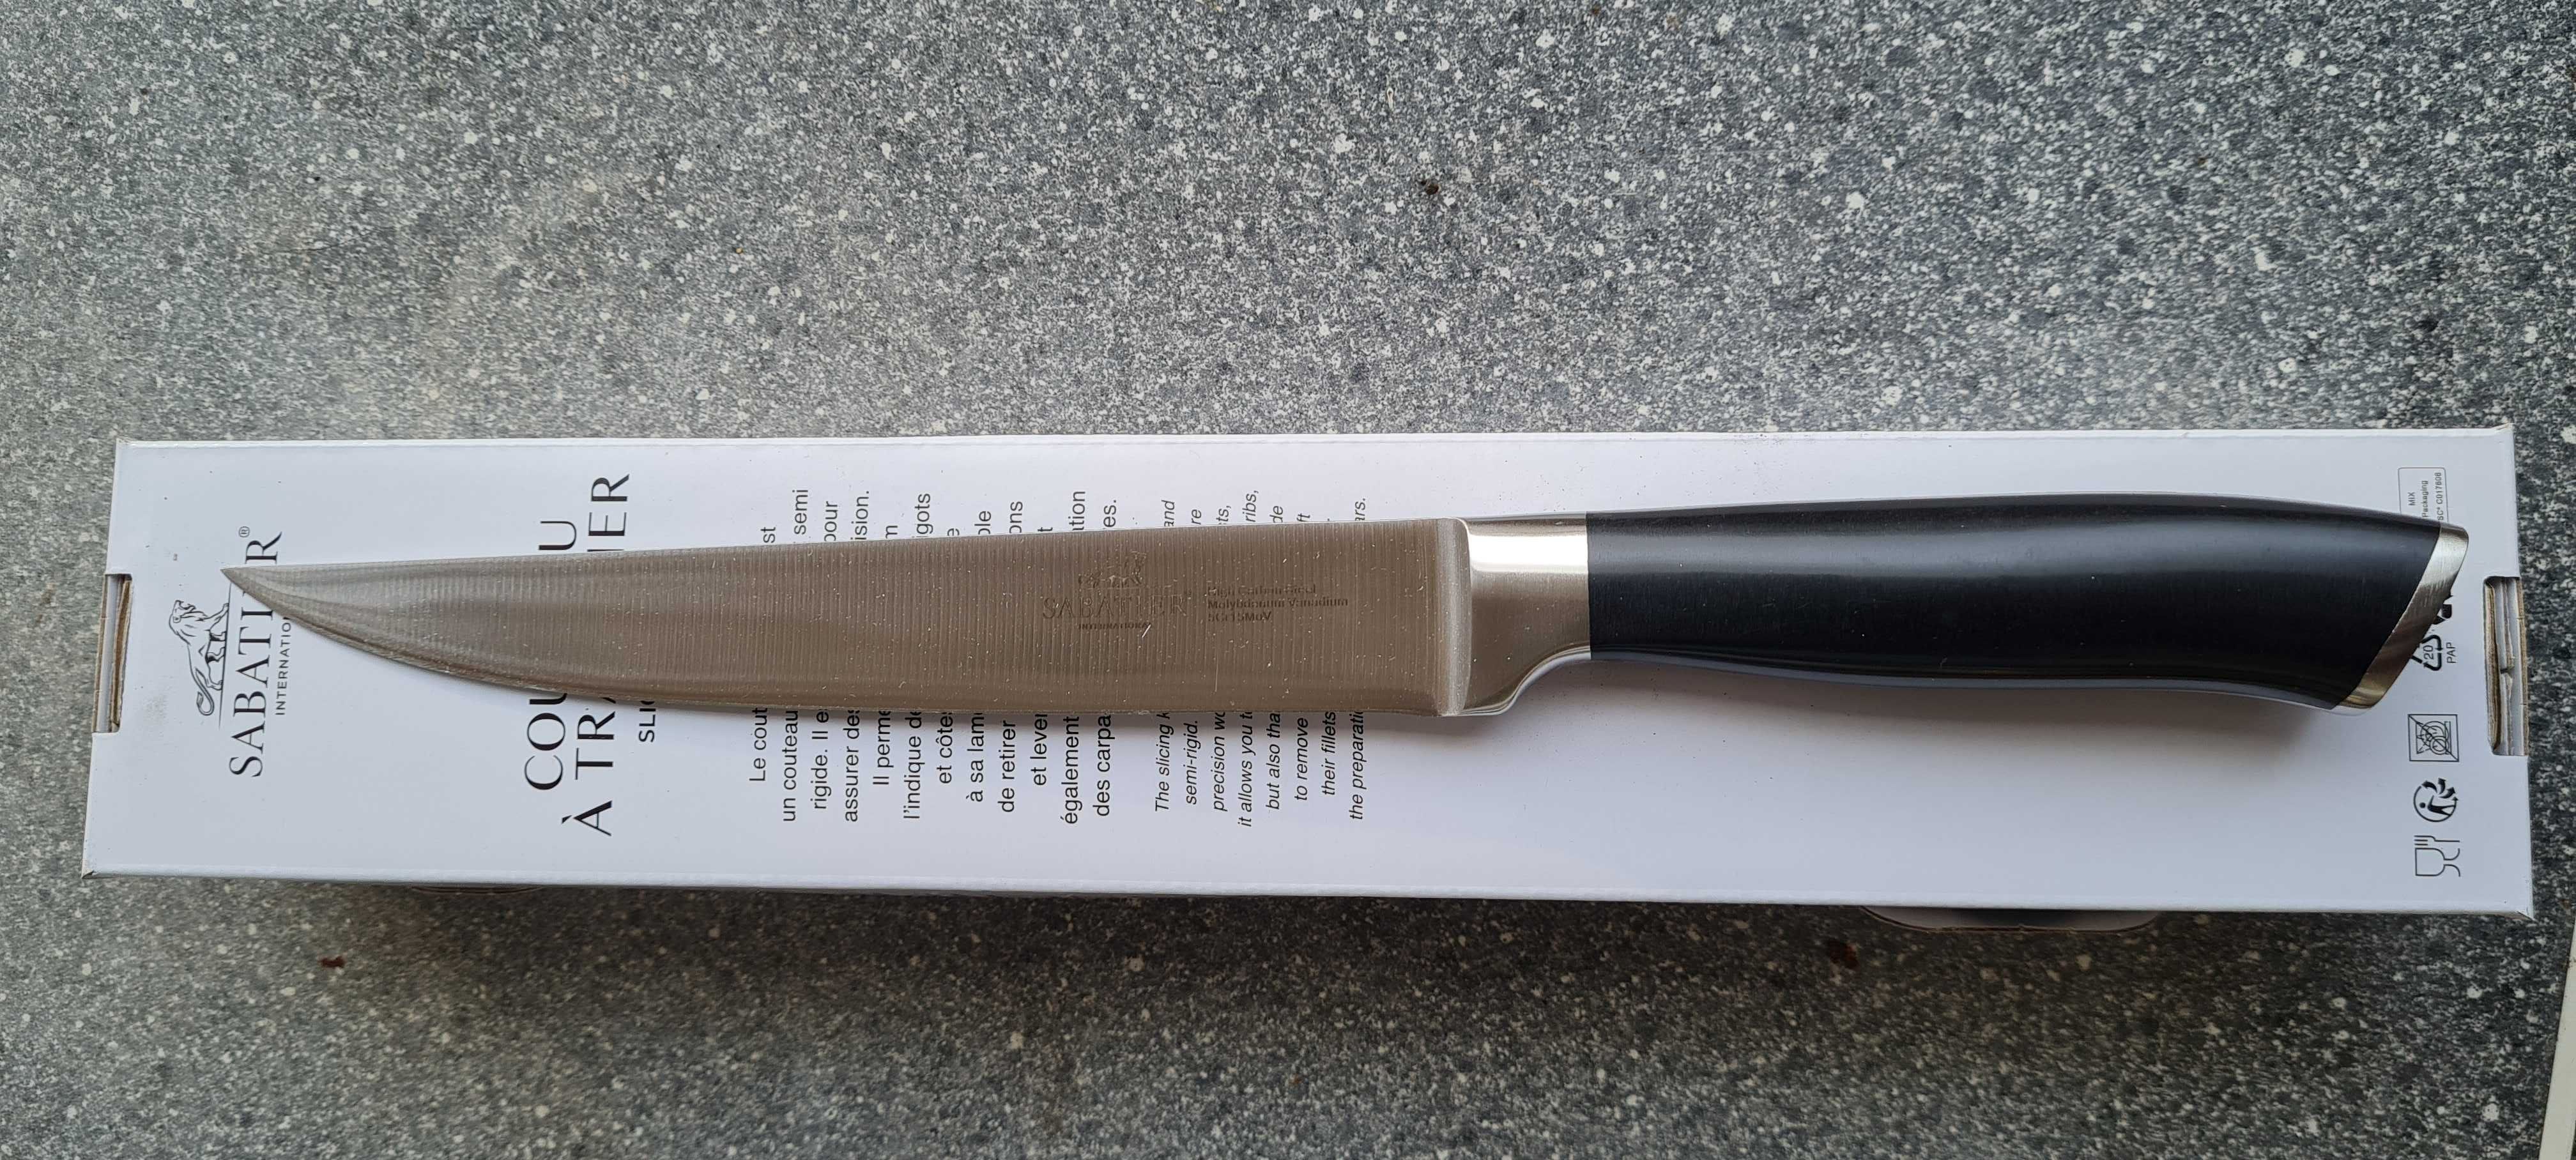 Nóż kuchenny, nóż do krojenia 19,8cm SABATIER